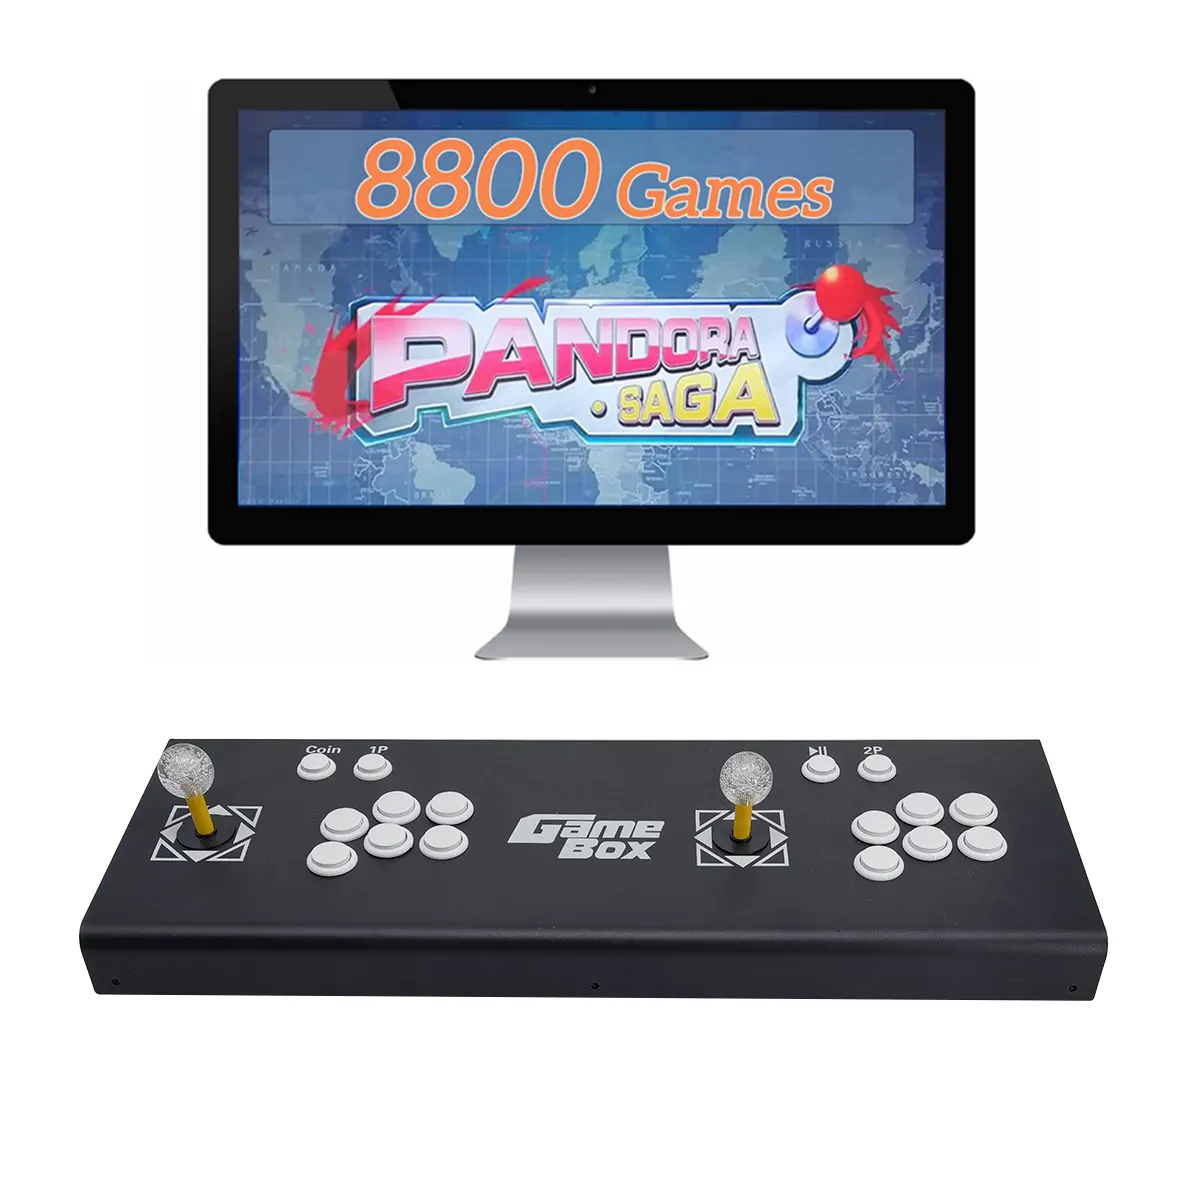 Can Diy Arcade Joysticks & Buttons Jamma 8800 In 1 Retro Video Arcade Game 5V Hd Output Game Console Box